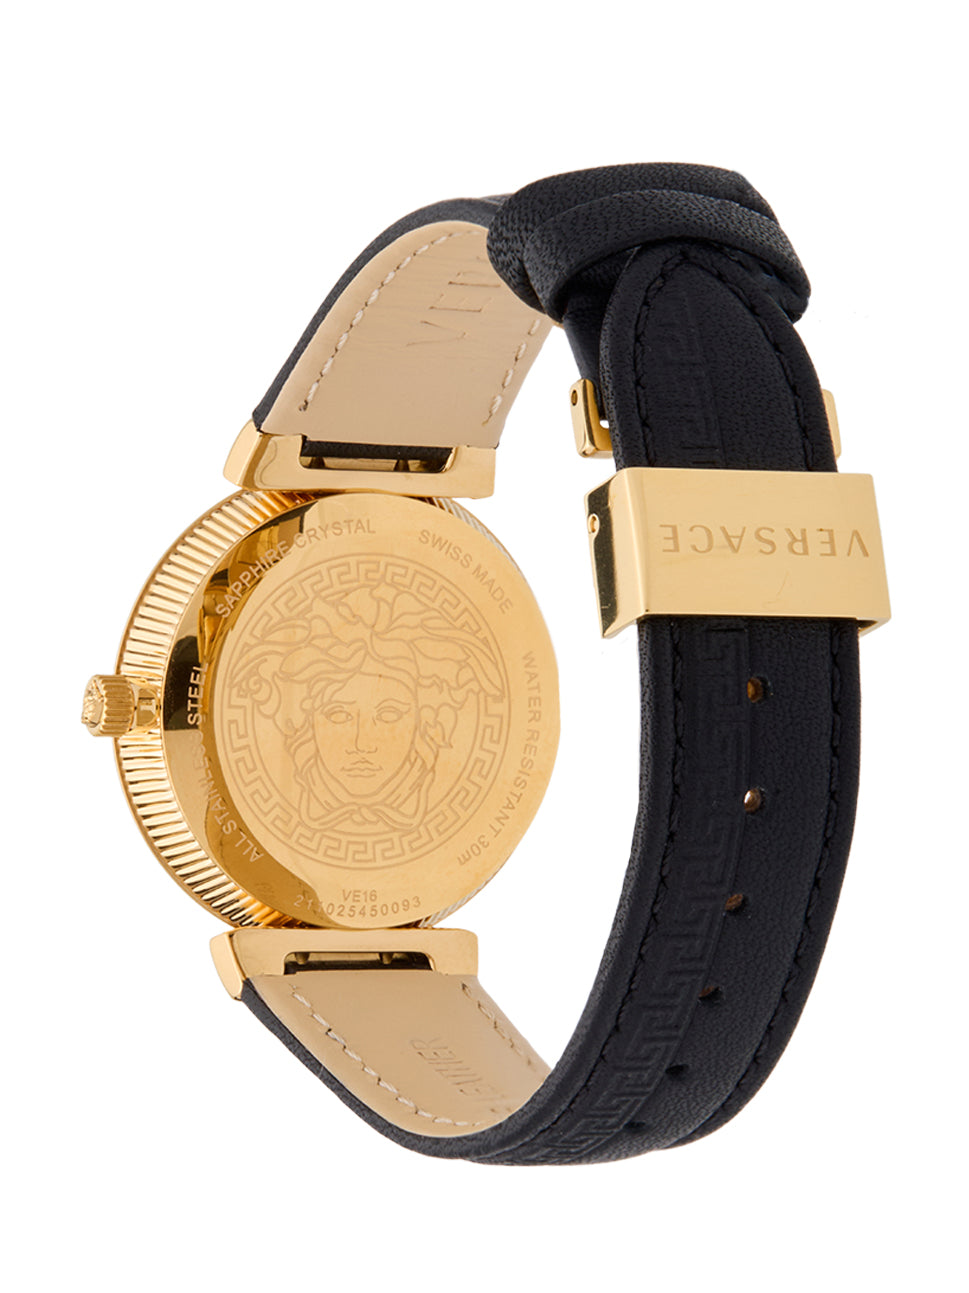 Versace Women's Daphnis Watch Black/Gold 35mm V16050017